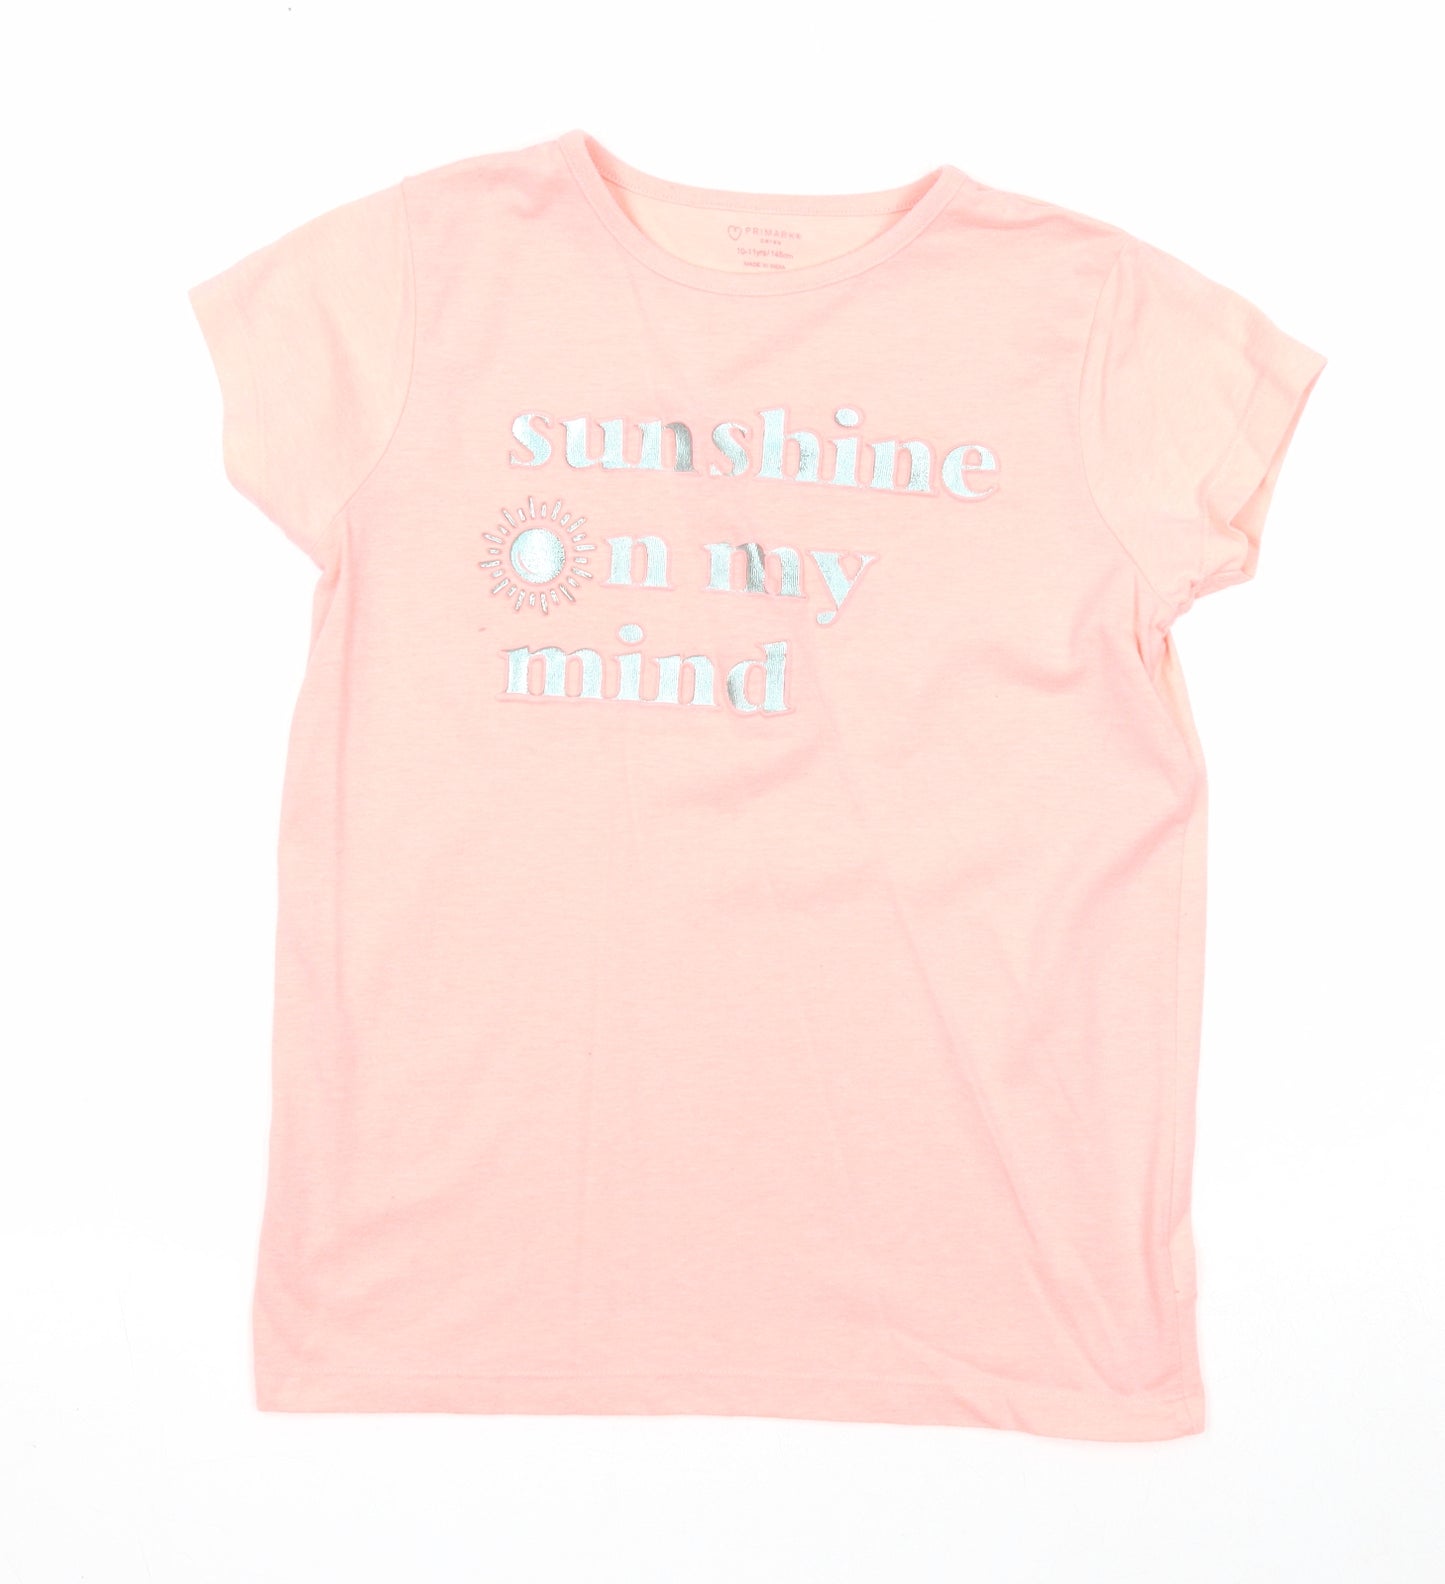 Primark Girls Pink Polyester Basic T-Shirt Size 10-11 Years Round Neck Pullover - Sunshine On My Mind